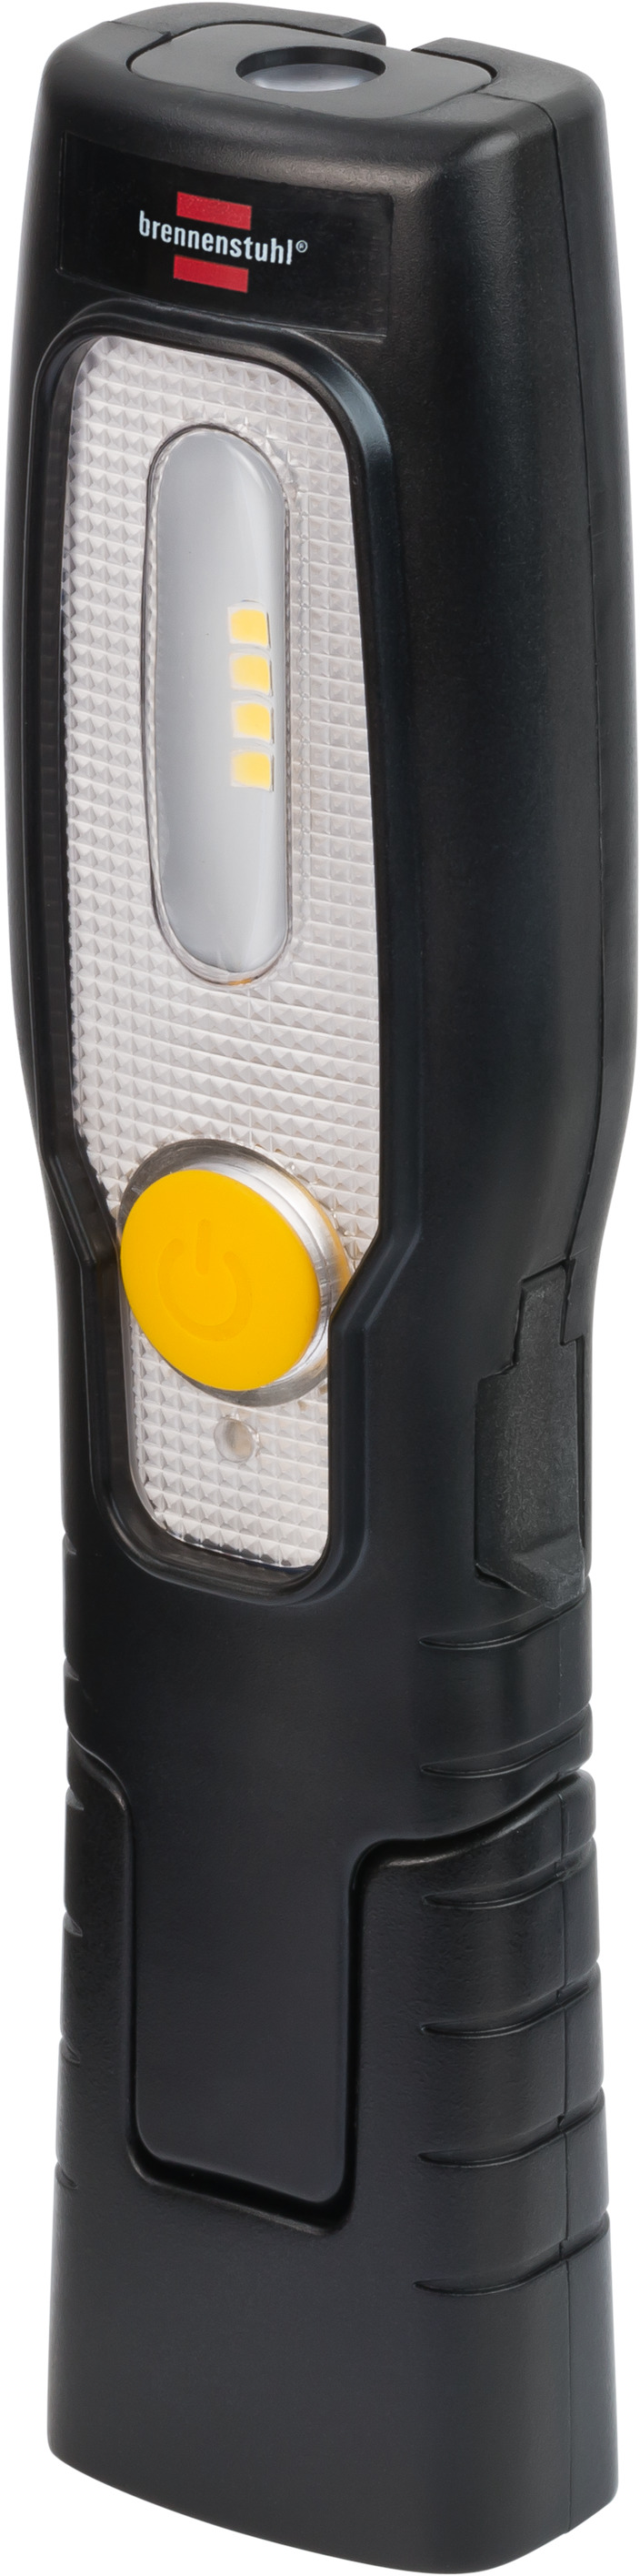 LED Akku-Handleuchte HL 200 A 250+70lm, brennenstuhl® knickbar 